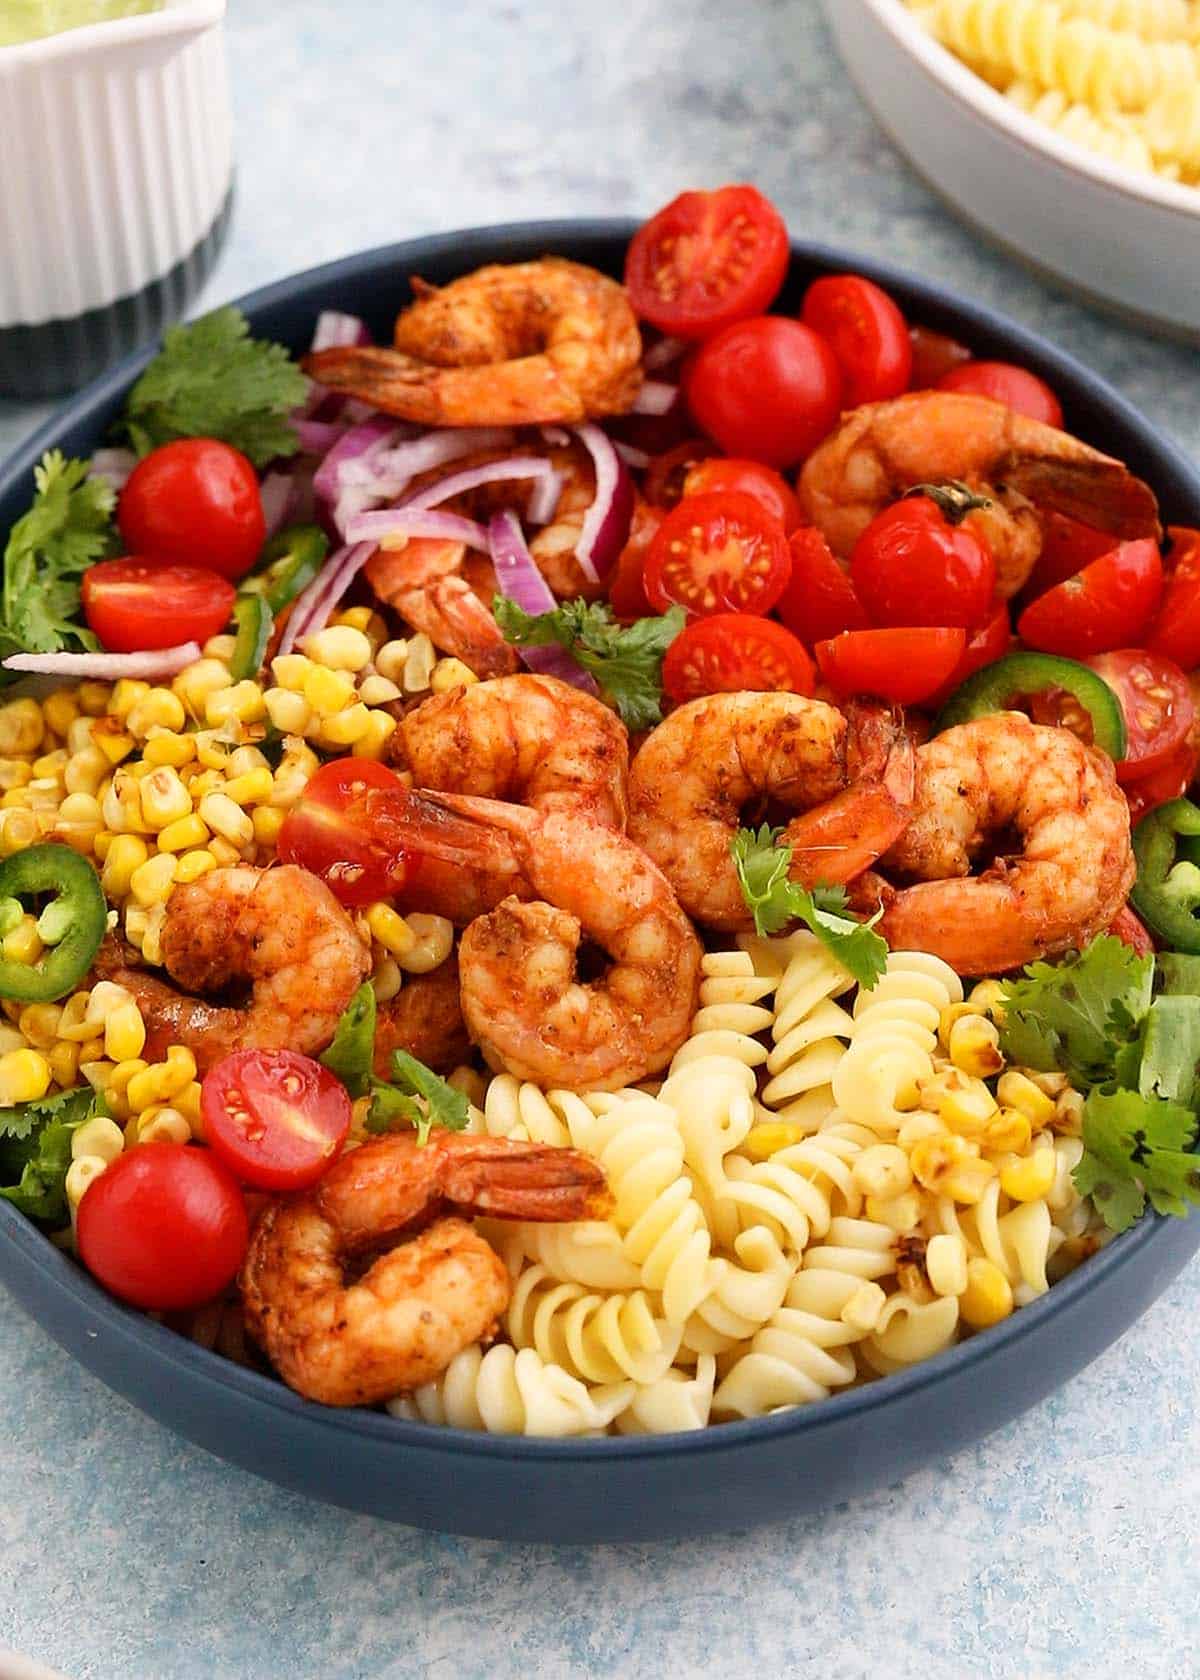 assembled shrimp and pasta salad in a blue bowl.